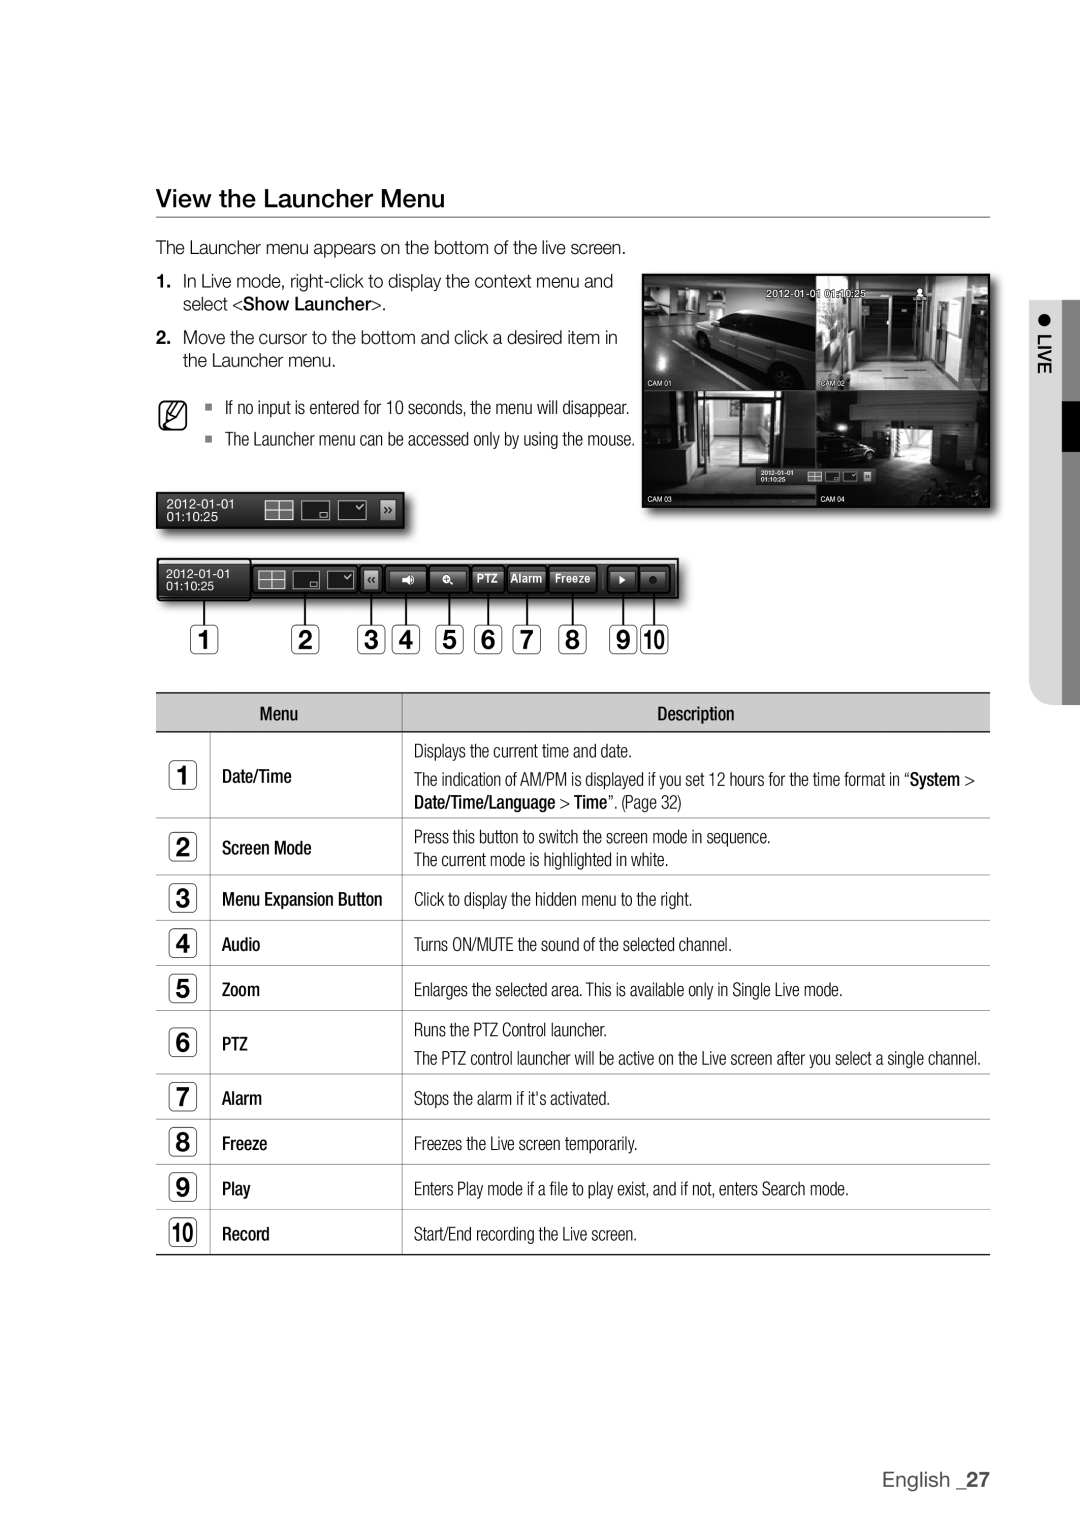 Samsung SDR3100 user manual a b cd efg h ij, view the Launcher menu, English 